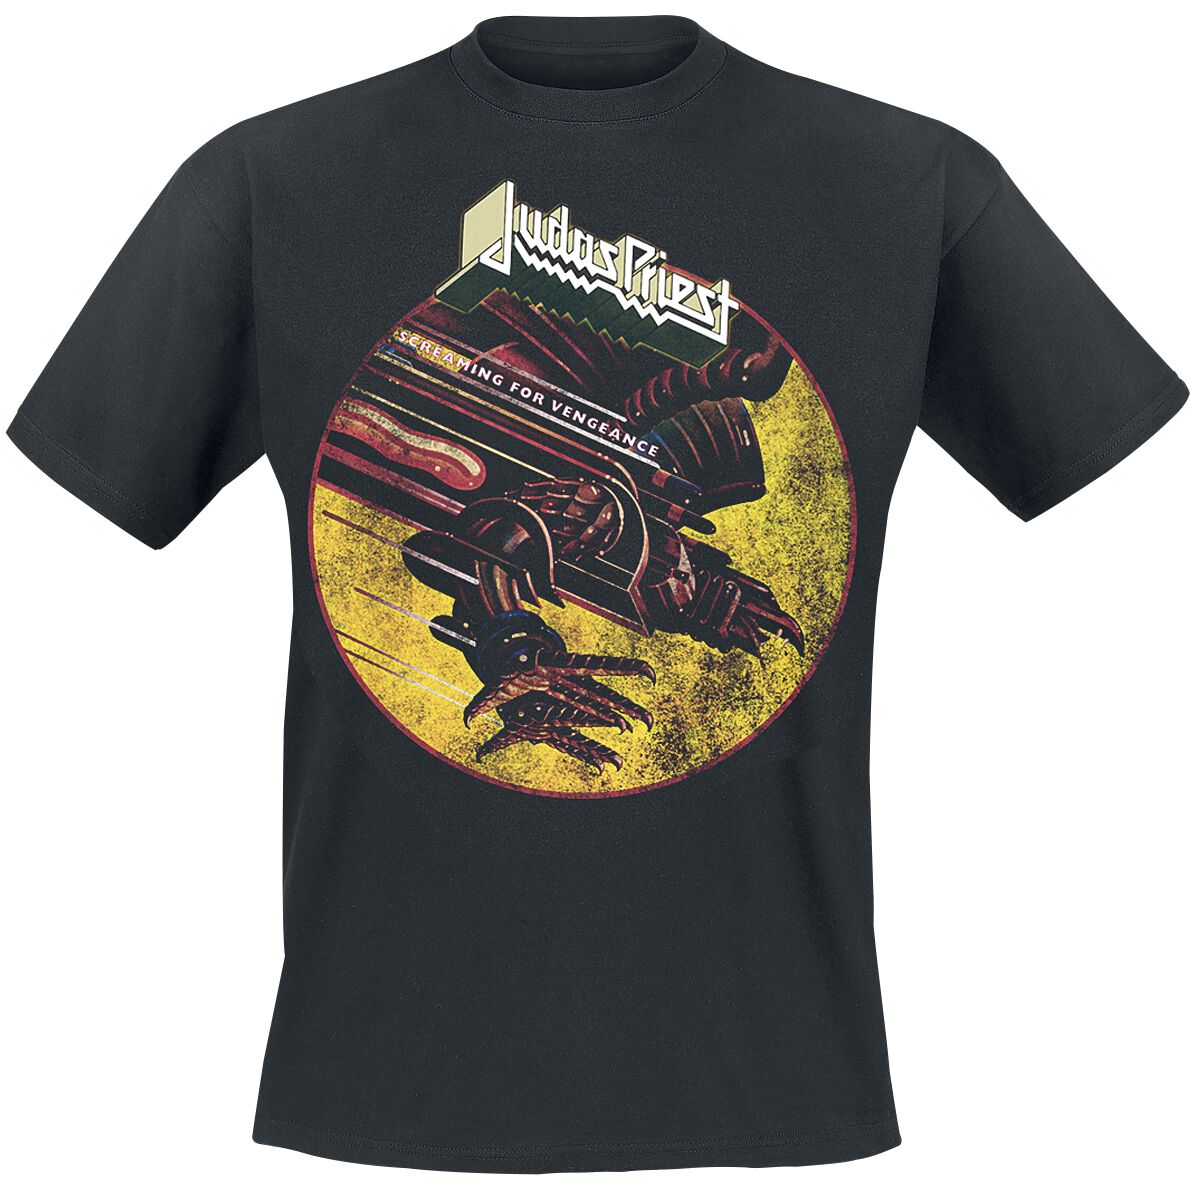 Judas Priest SFV Distressed T-Shirt schwarz in L